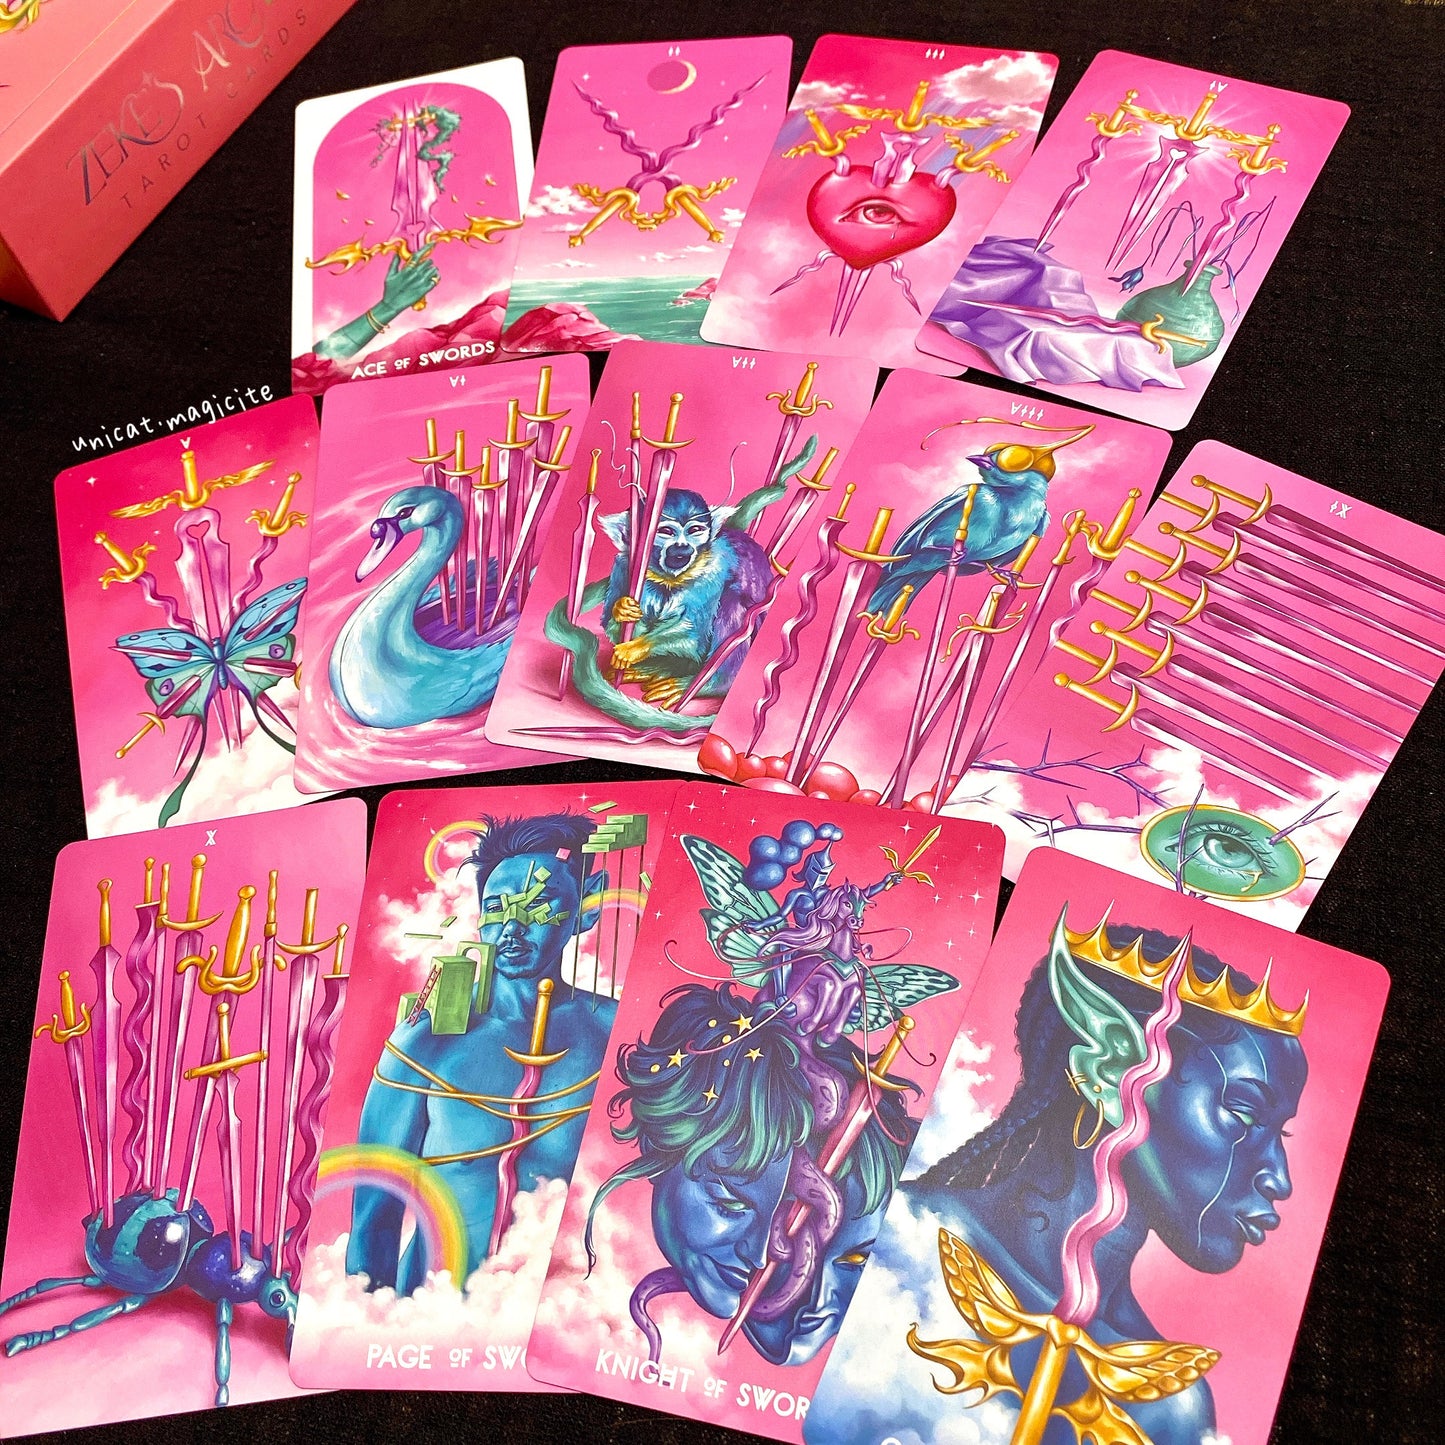 💖Zeke's Arcana Colourful Unique Tarot Card Deck